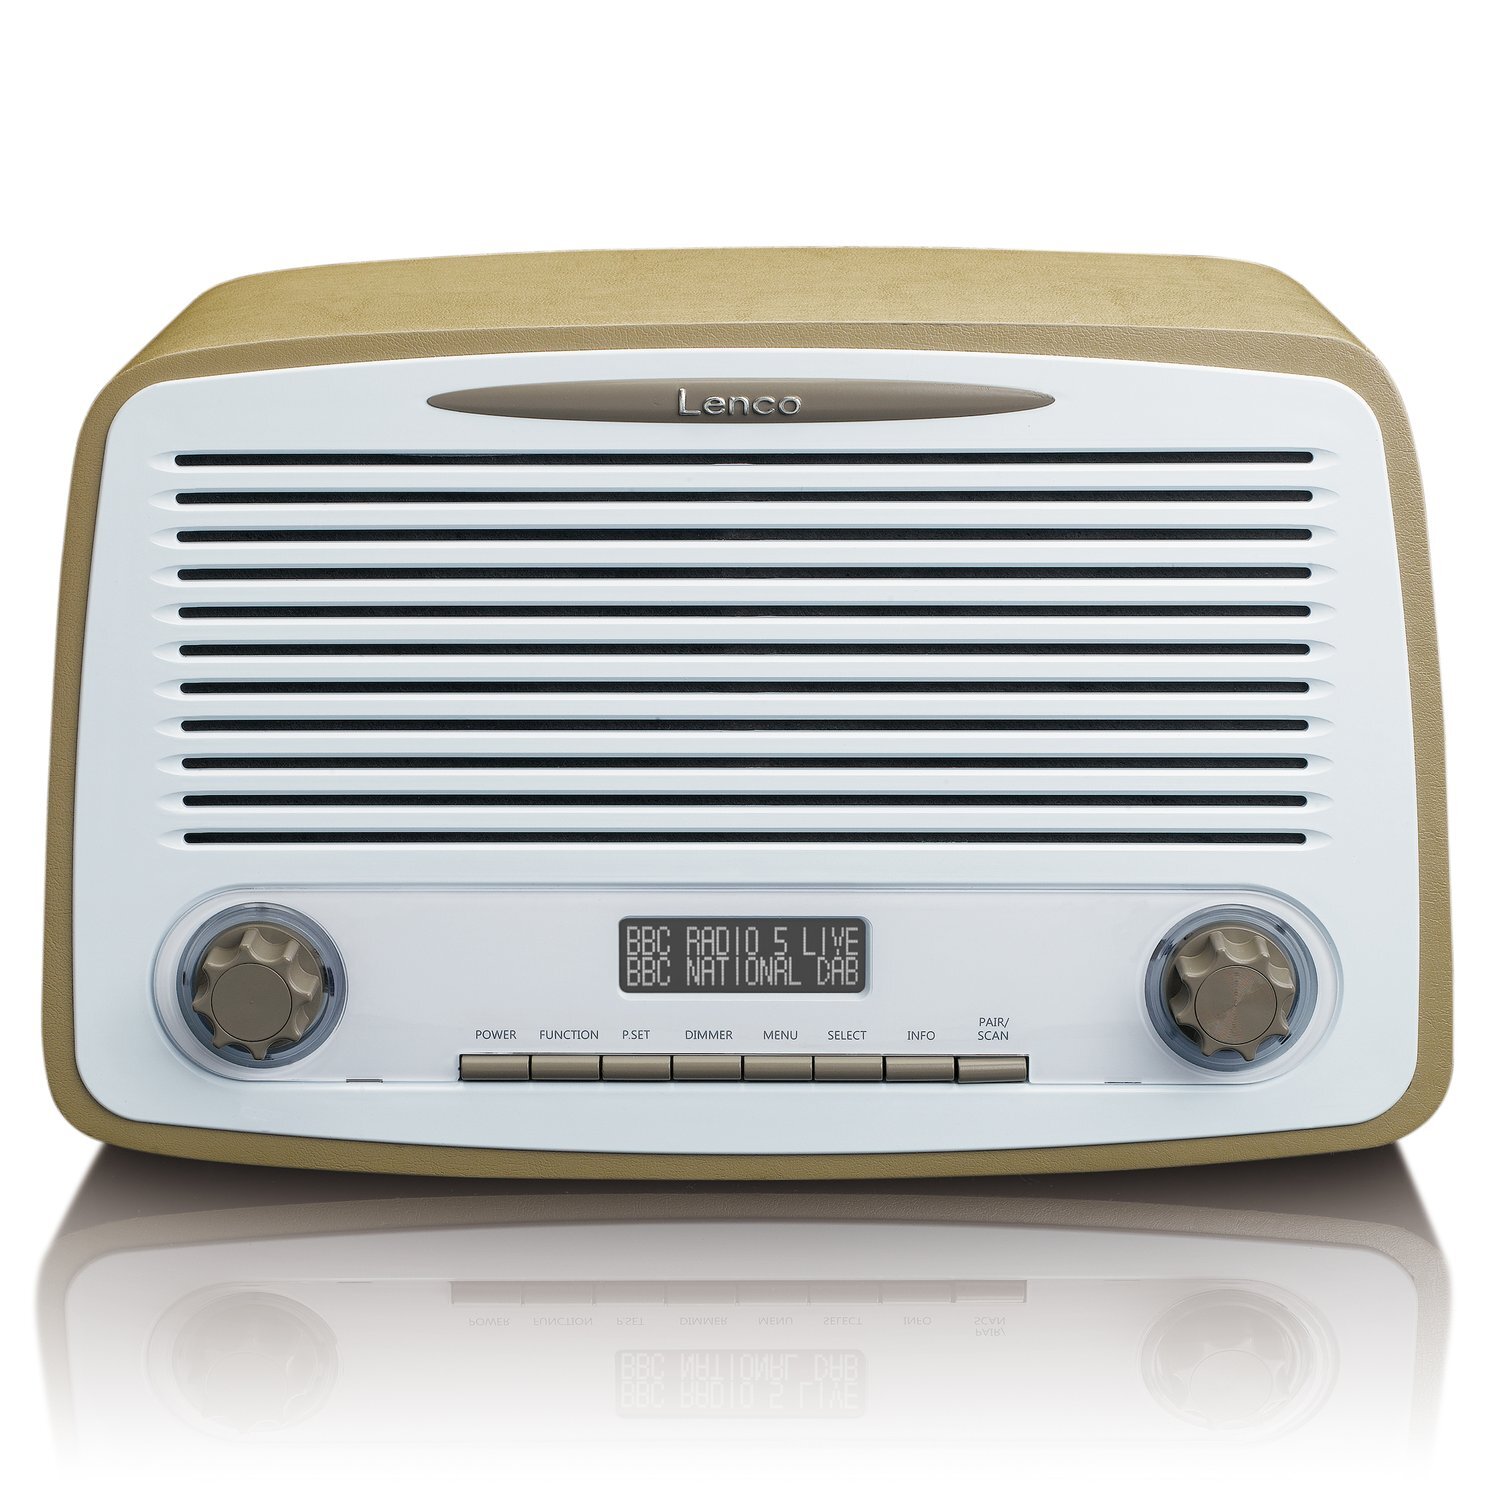 Lenco DAR-012 DAB-radio, tre - Elkjøp